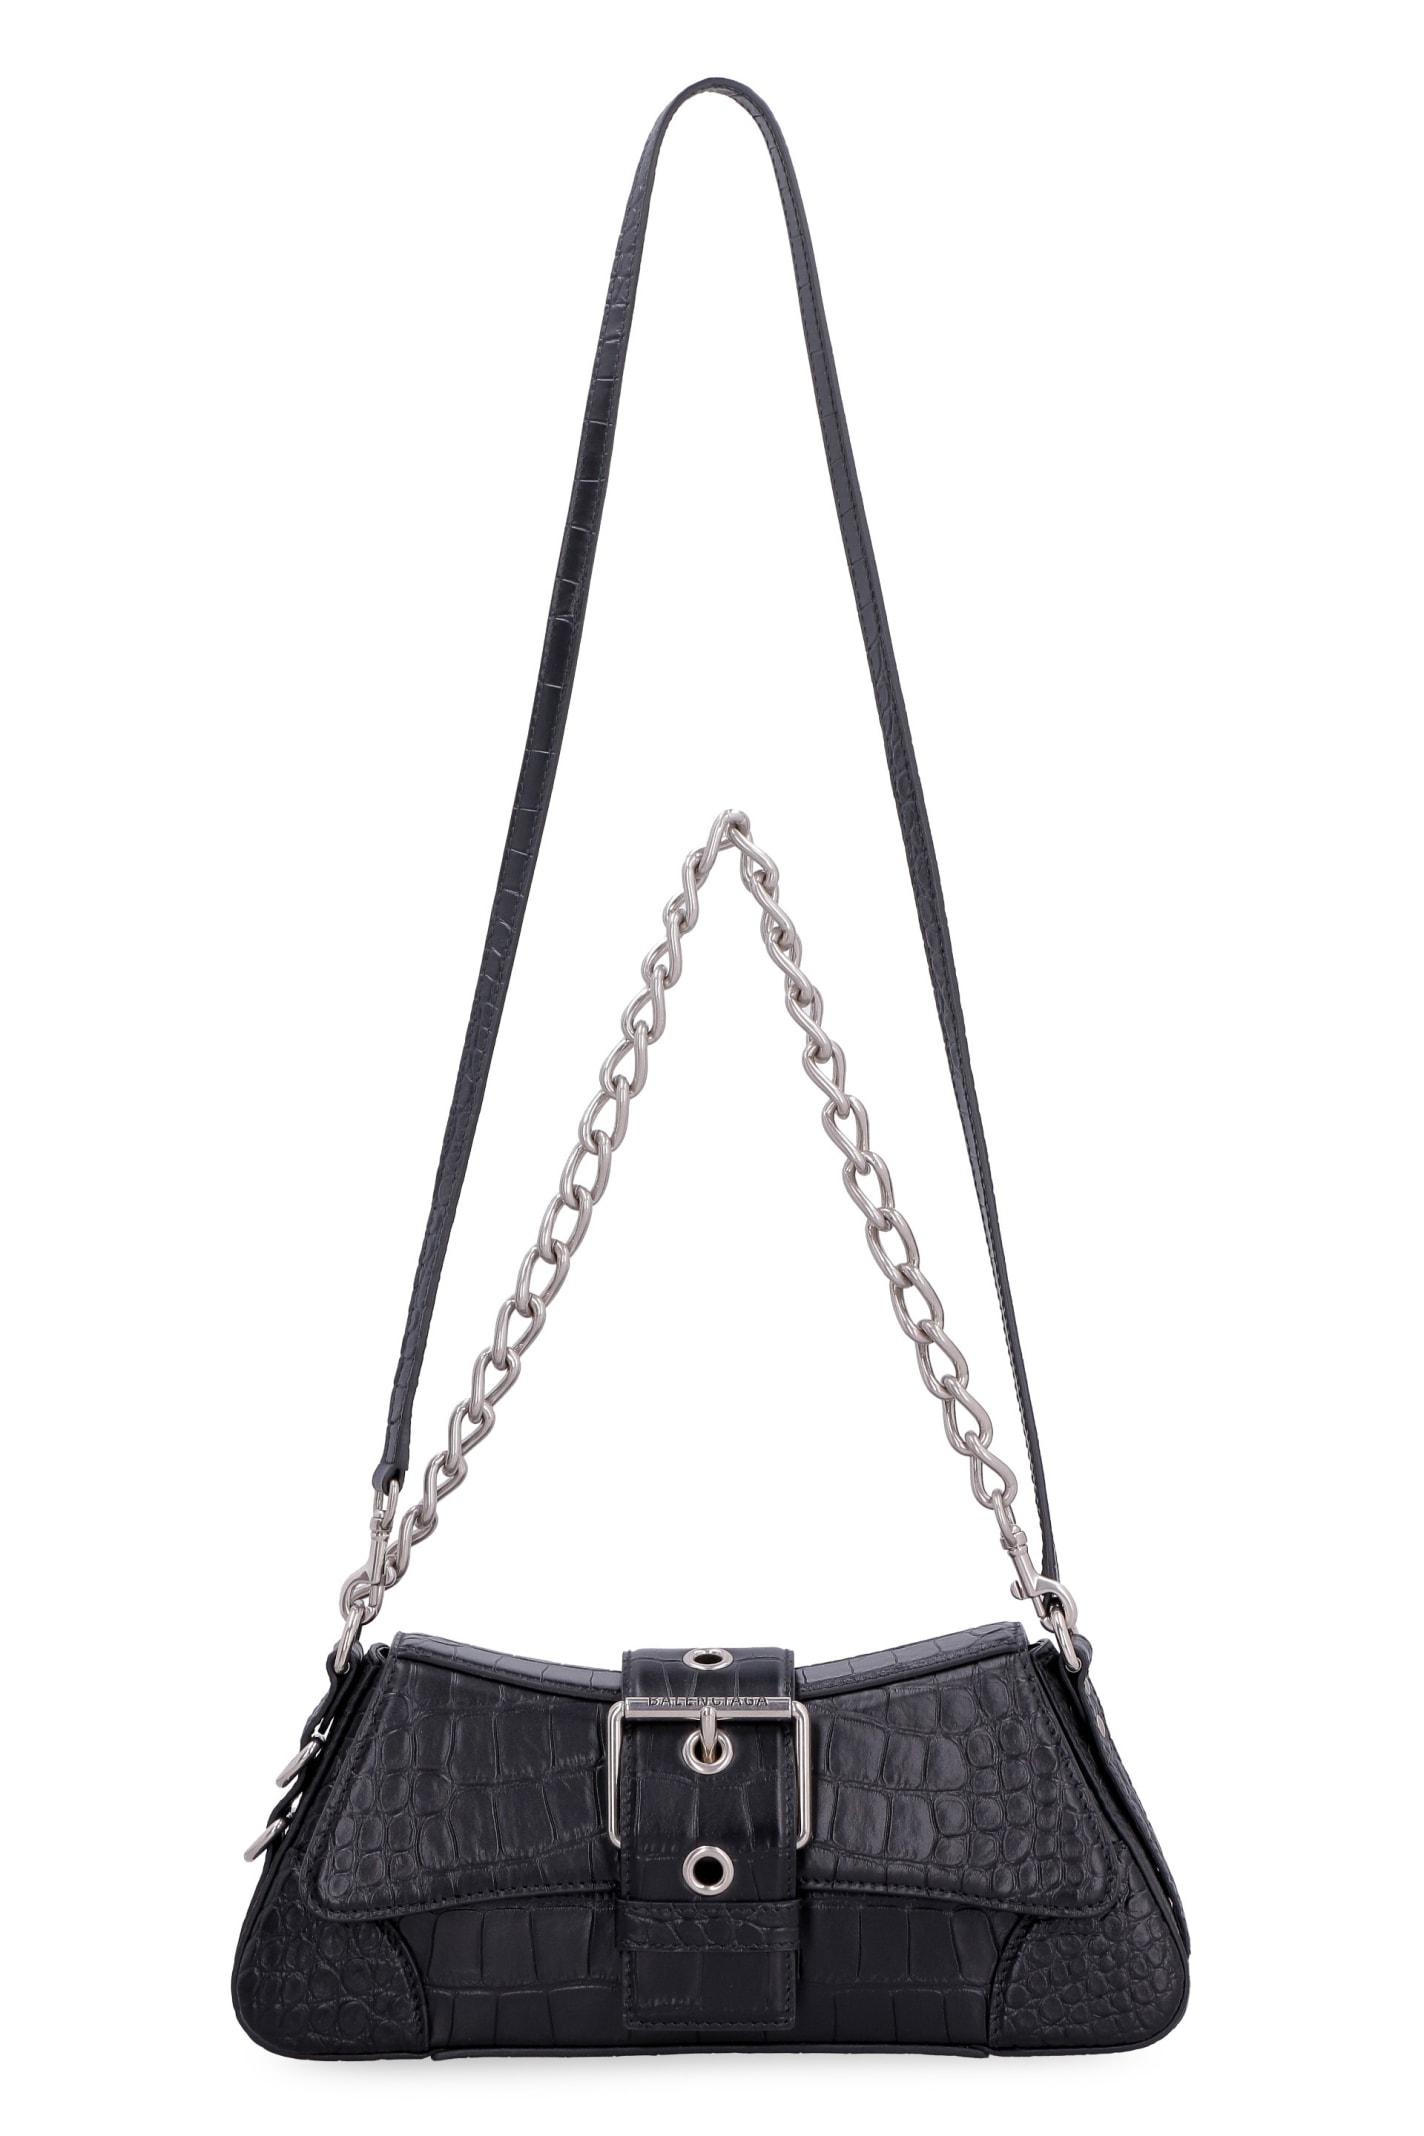 Balenciaga Lindsay Shoulder Bag in Black | Lyst